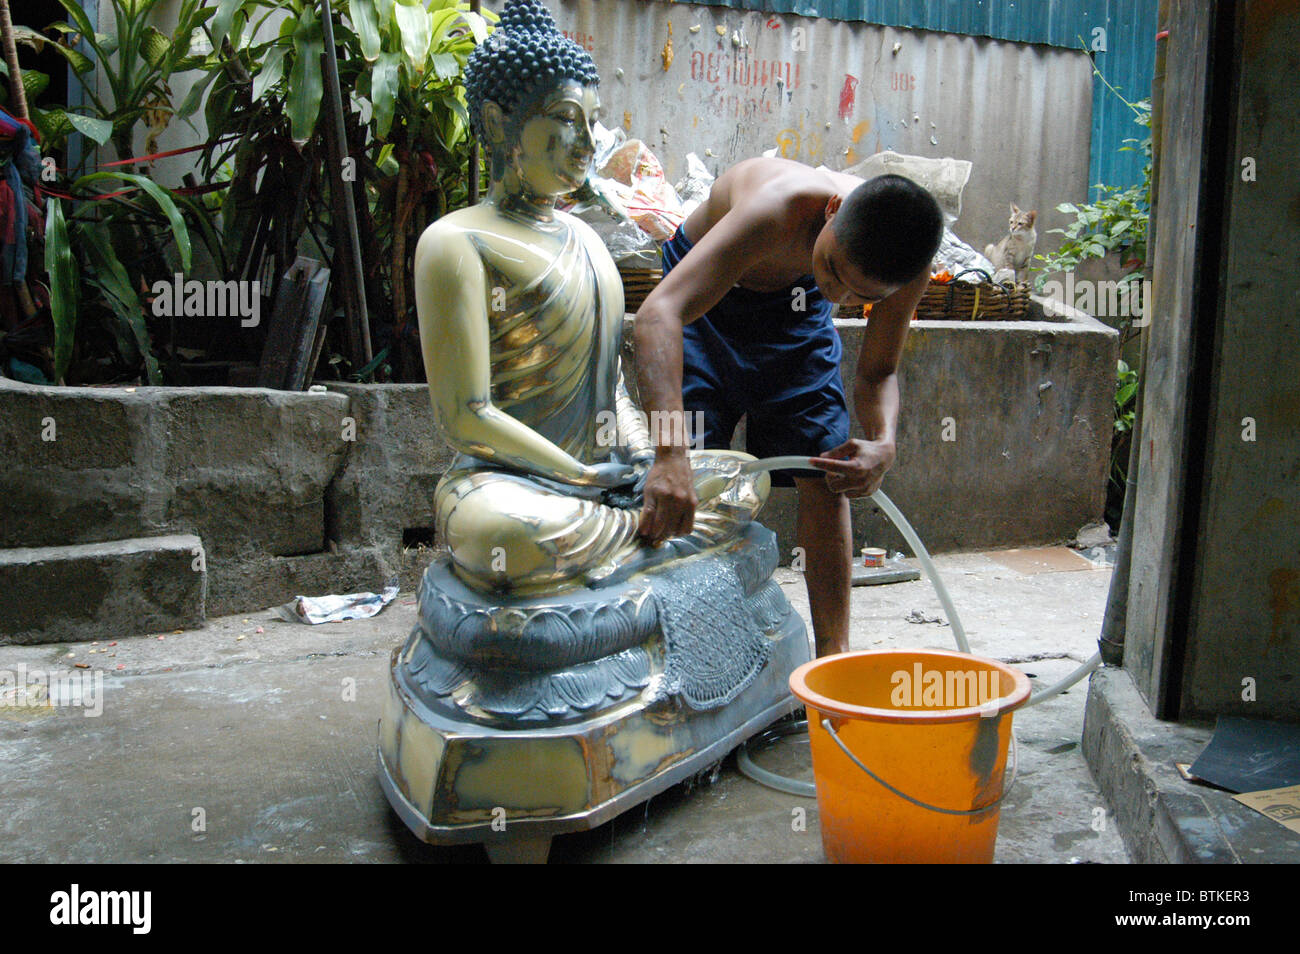 Boy cleans Buddha outside buddha workshop. Stock Photo